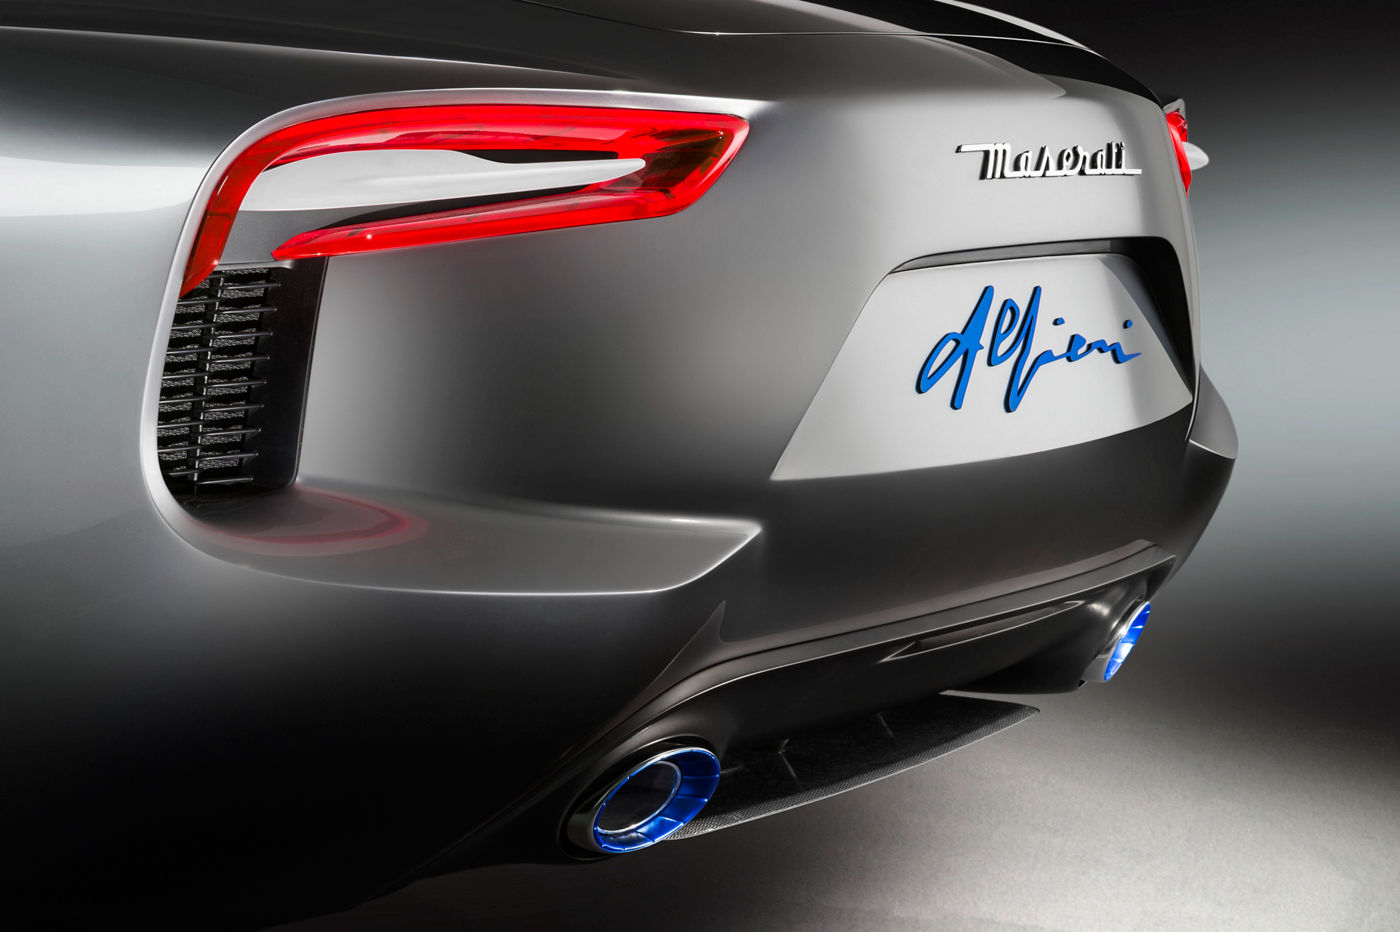 Details of rear of Alfieri Concept Car